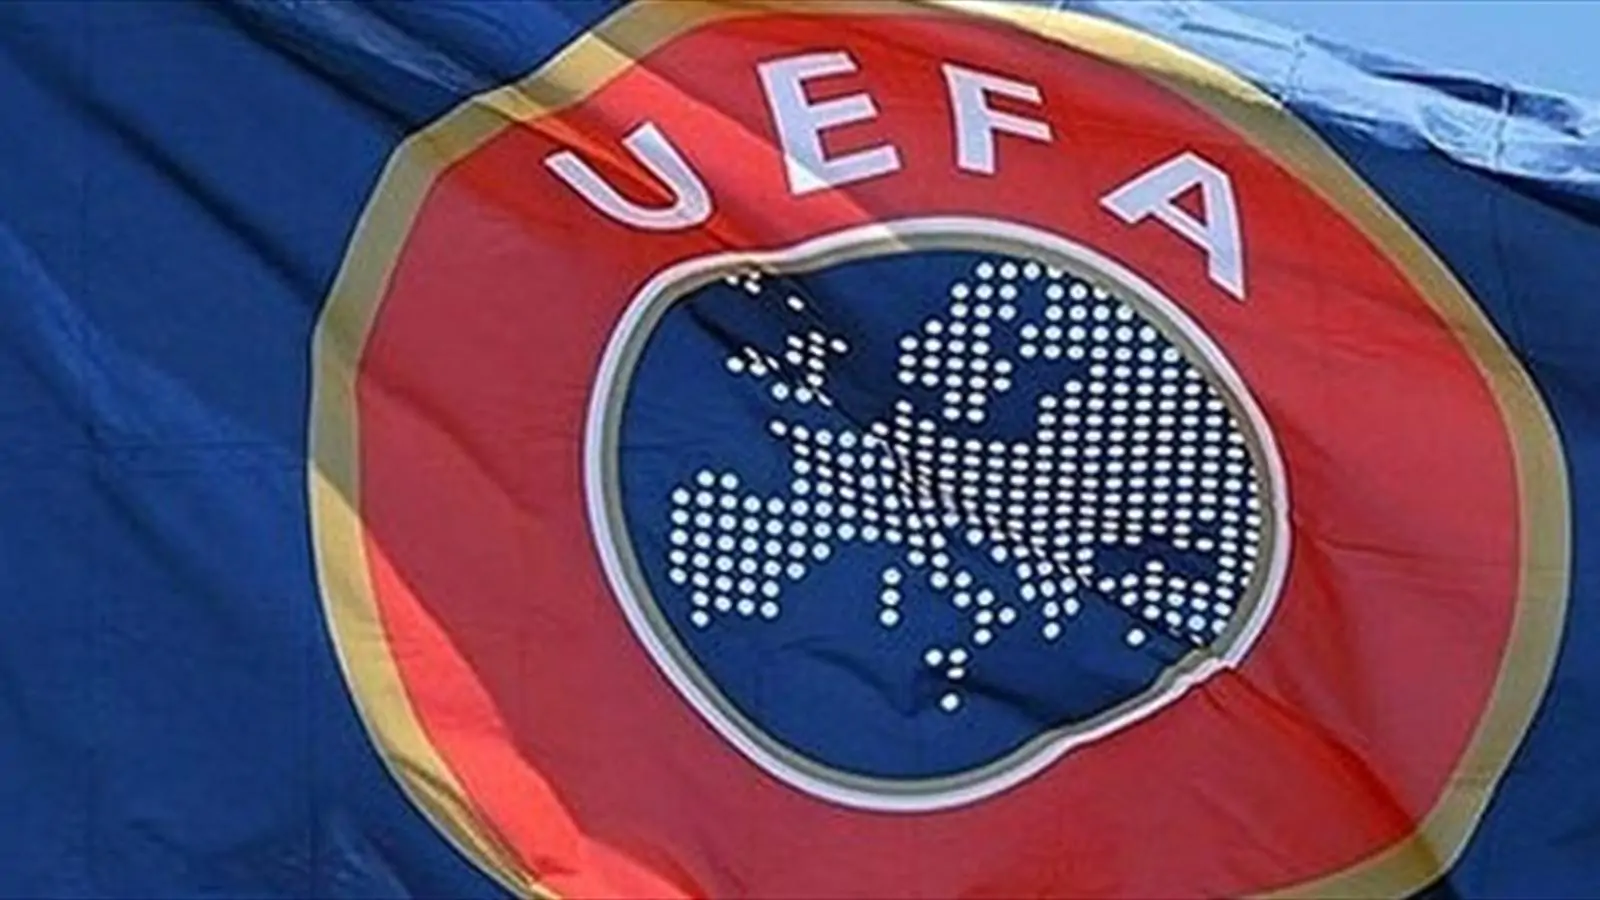 UEFA top club